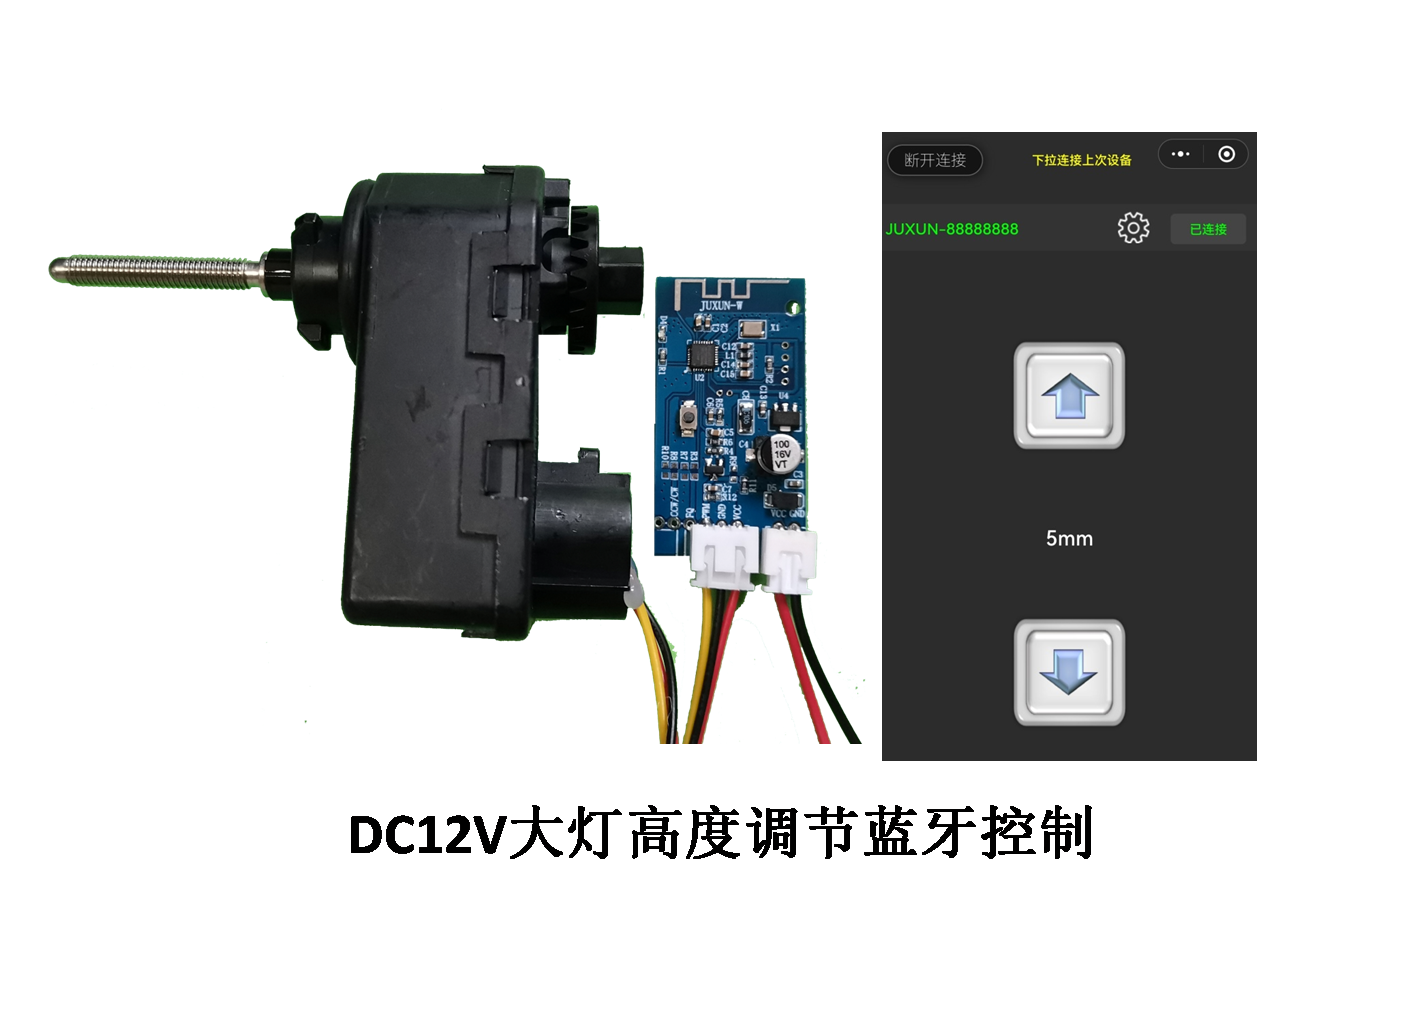 DC12V伸缩电机汽车电动车大灯手机蓝牙智能控制高低调节